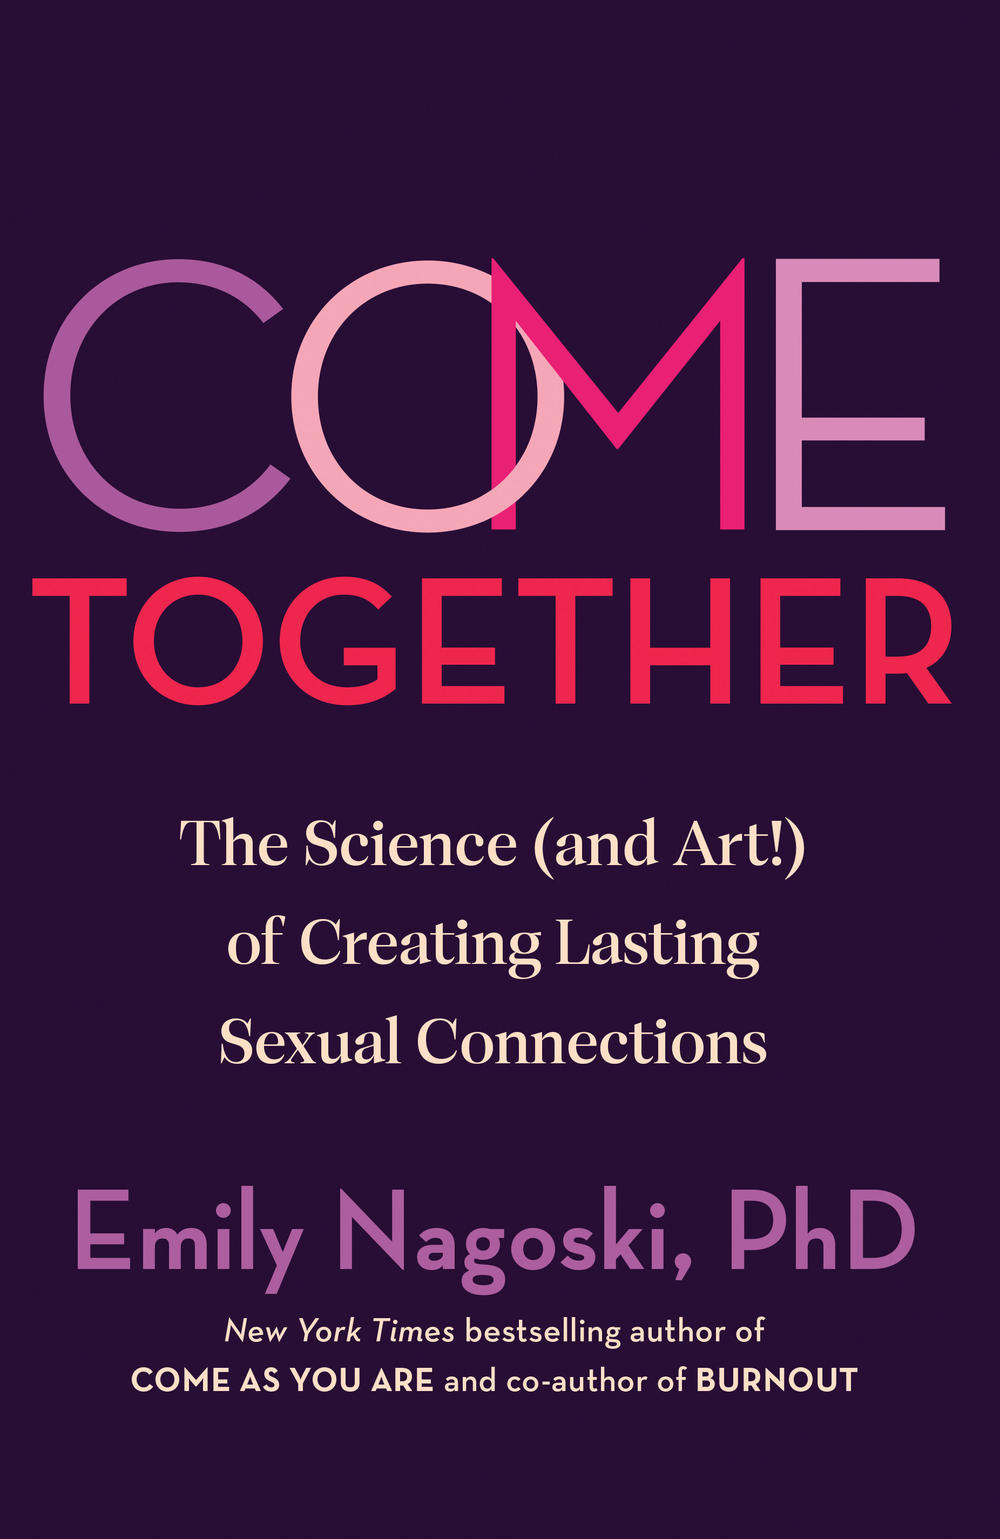 The cover of Nagoski's newest book, <em>Come Together</em>.